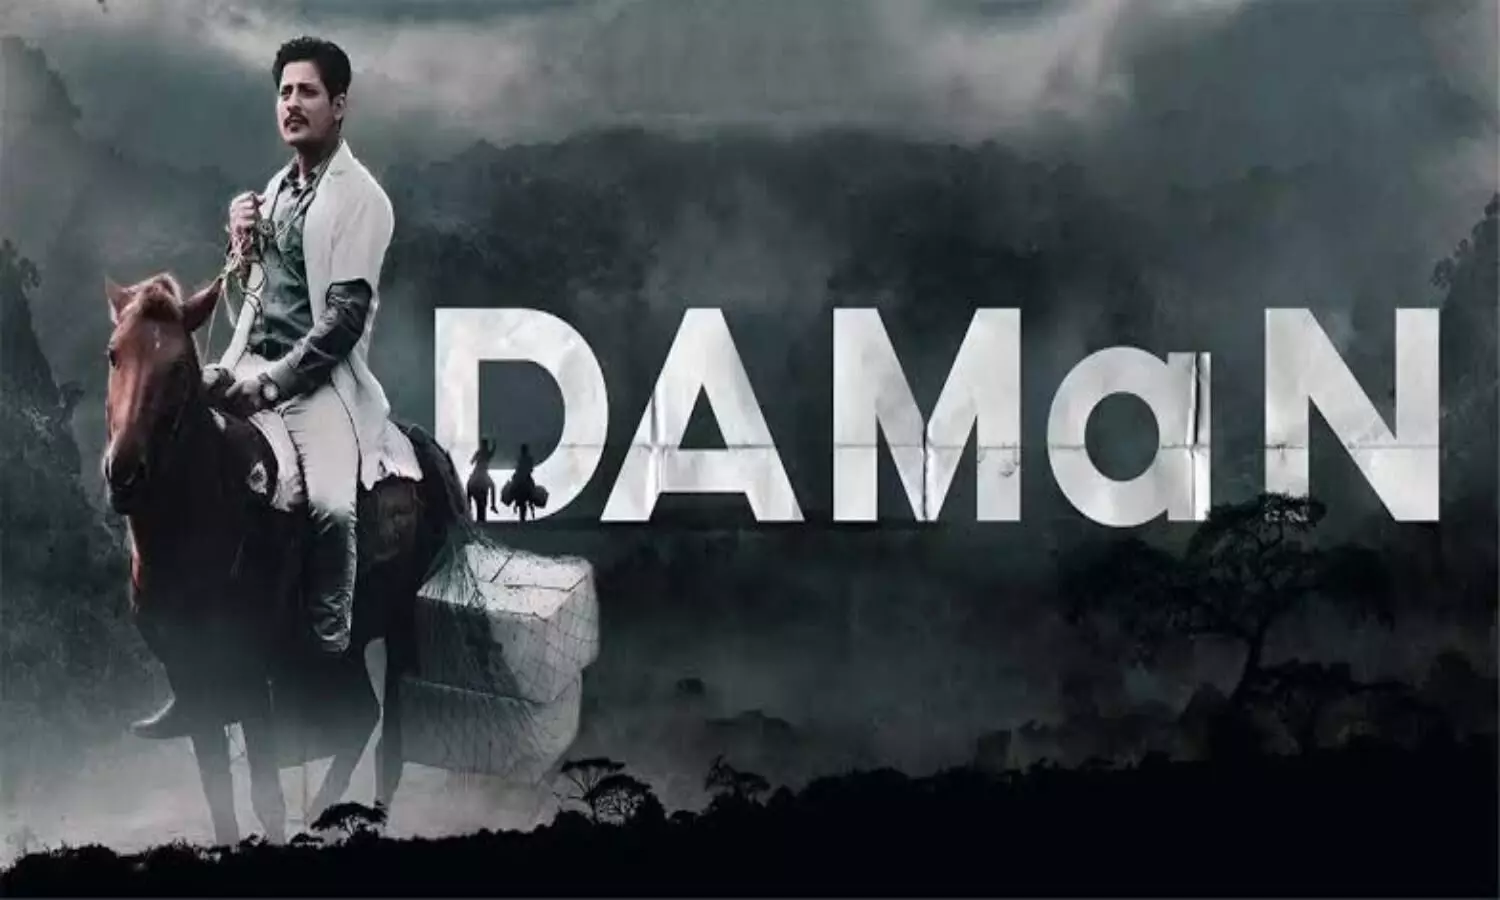 Daman movie Hindi trailer